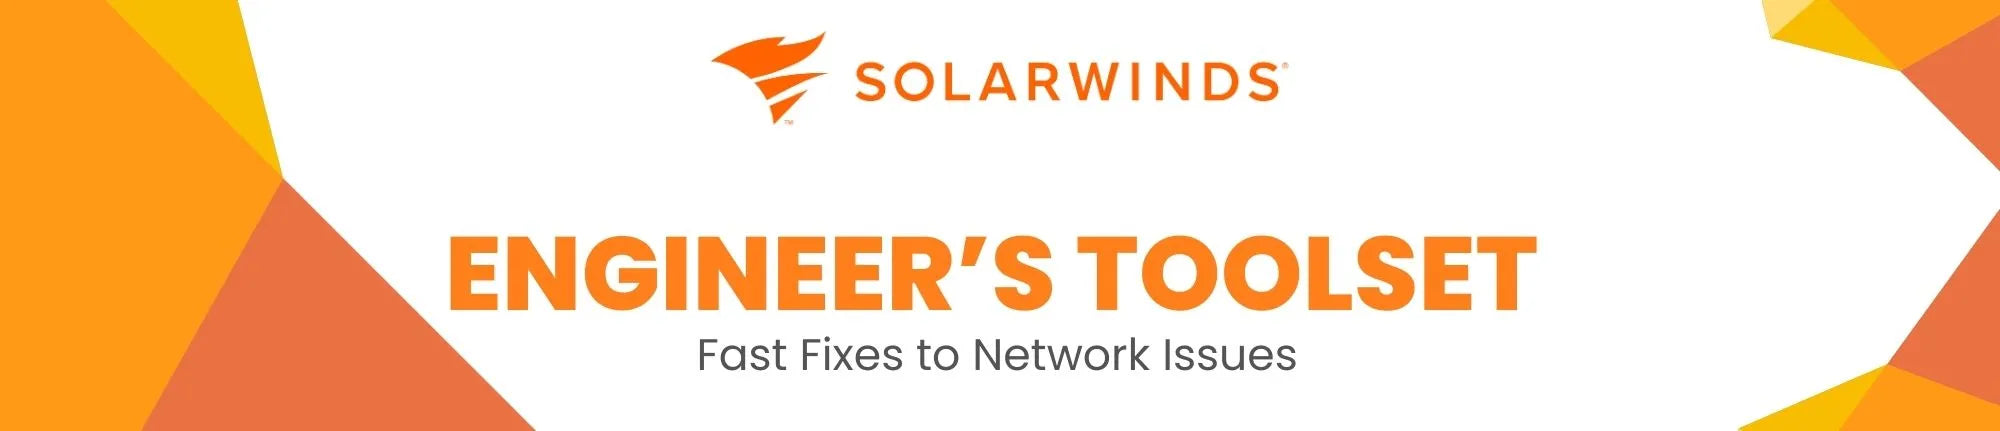 SolarWinds Engineer's Toolset